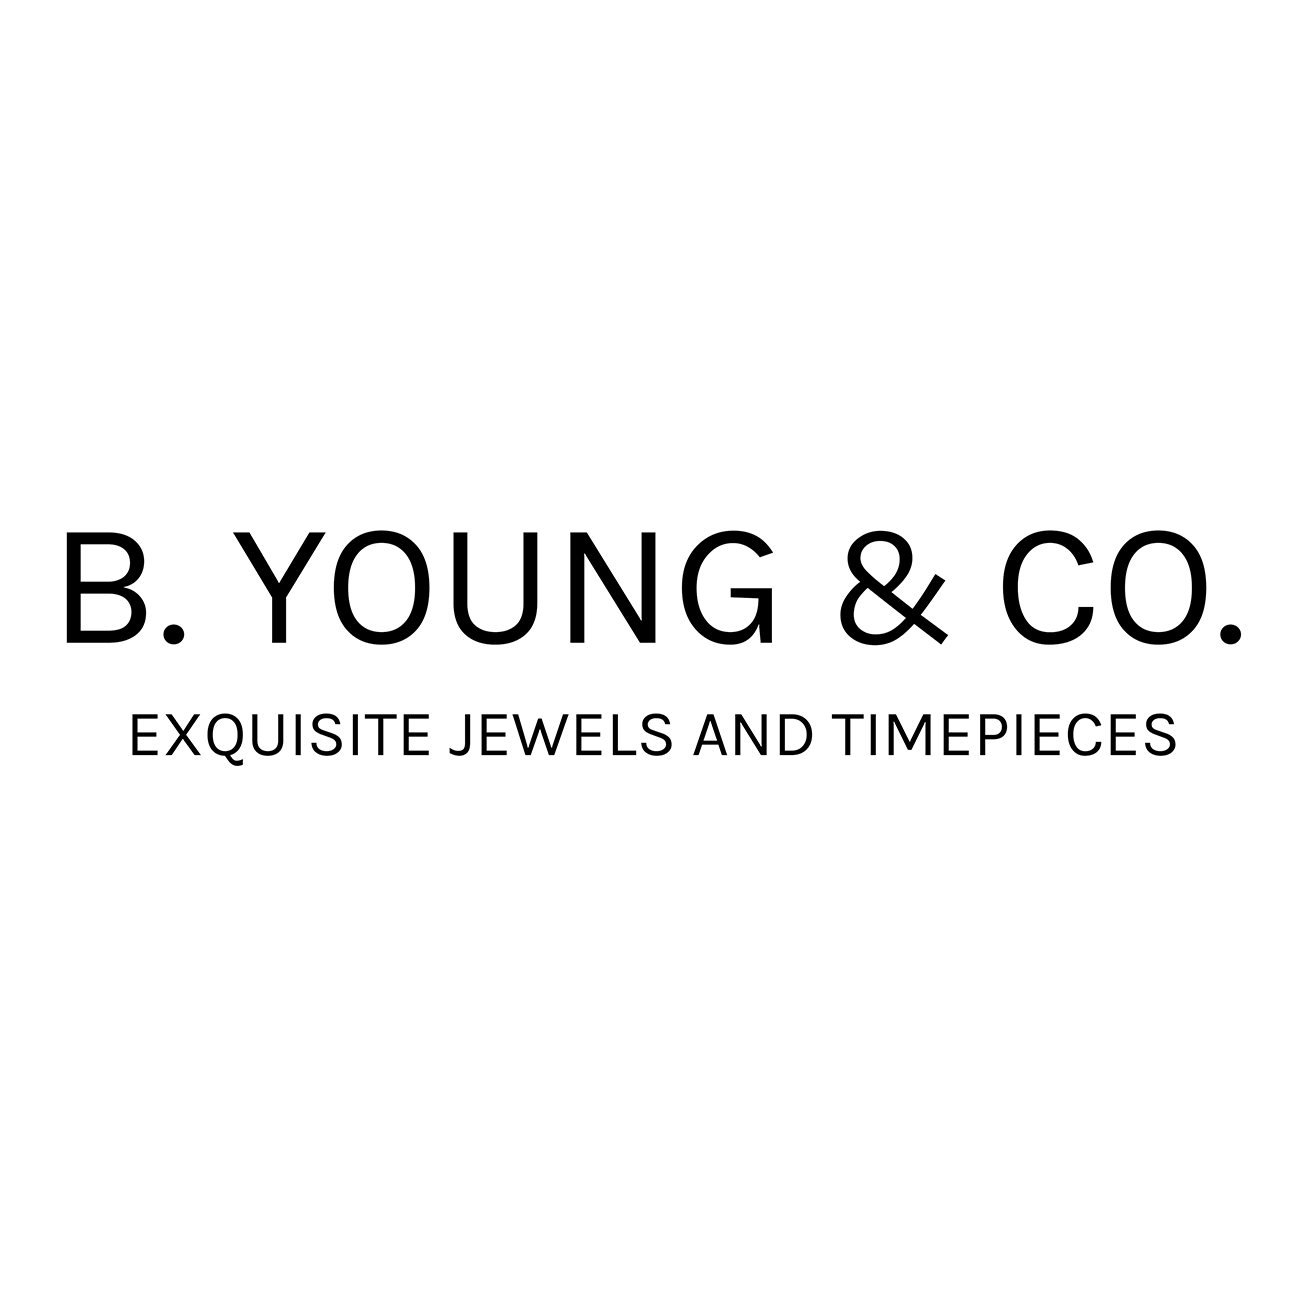 B. Young & Co. Logo